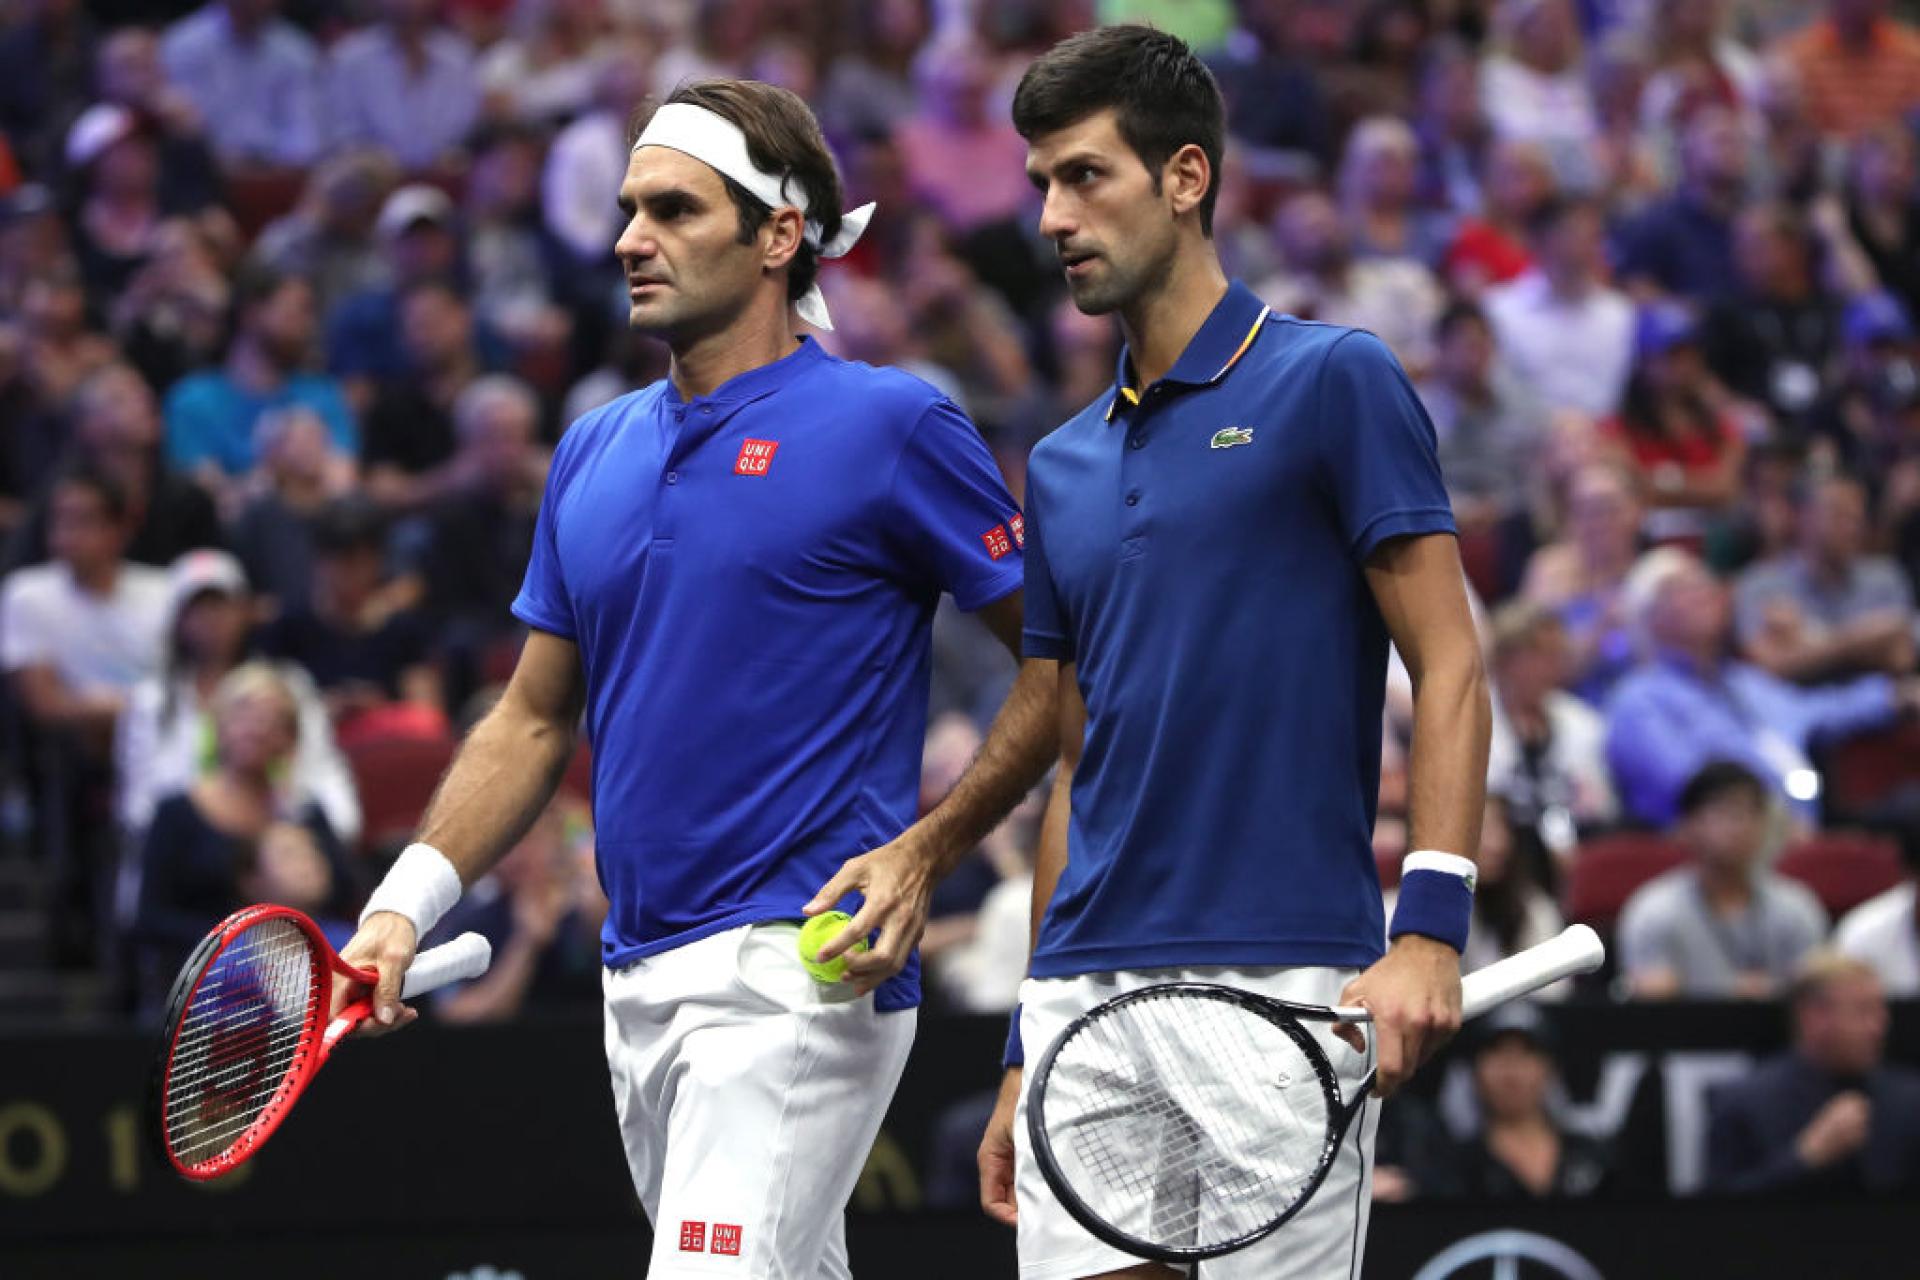 Federer and Djokovic